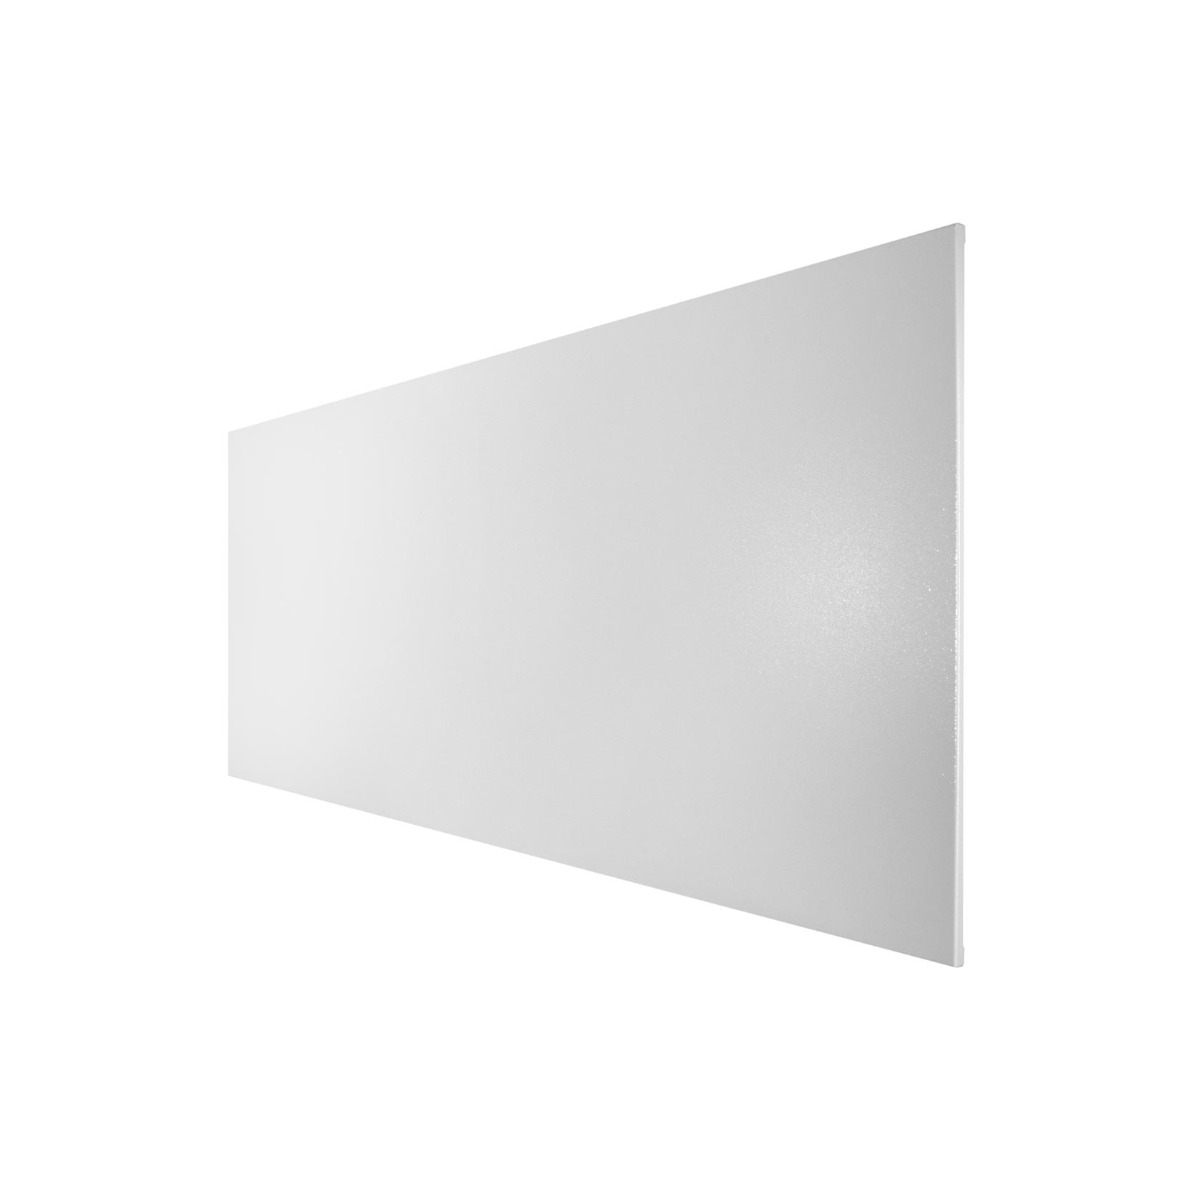 Technotherm ISP Frameless Infrared Heating Panel - White 350w (900 x 400mm)